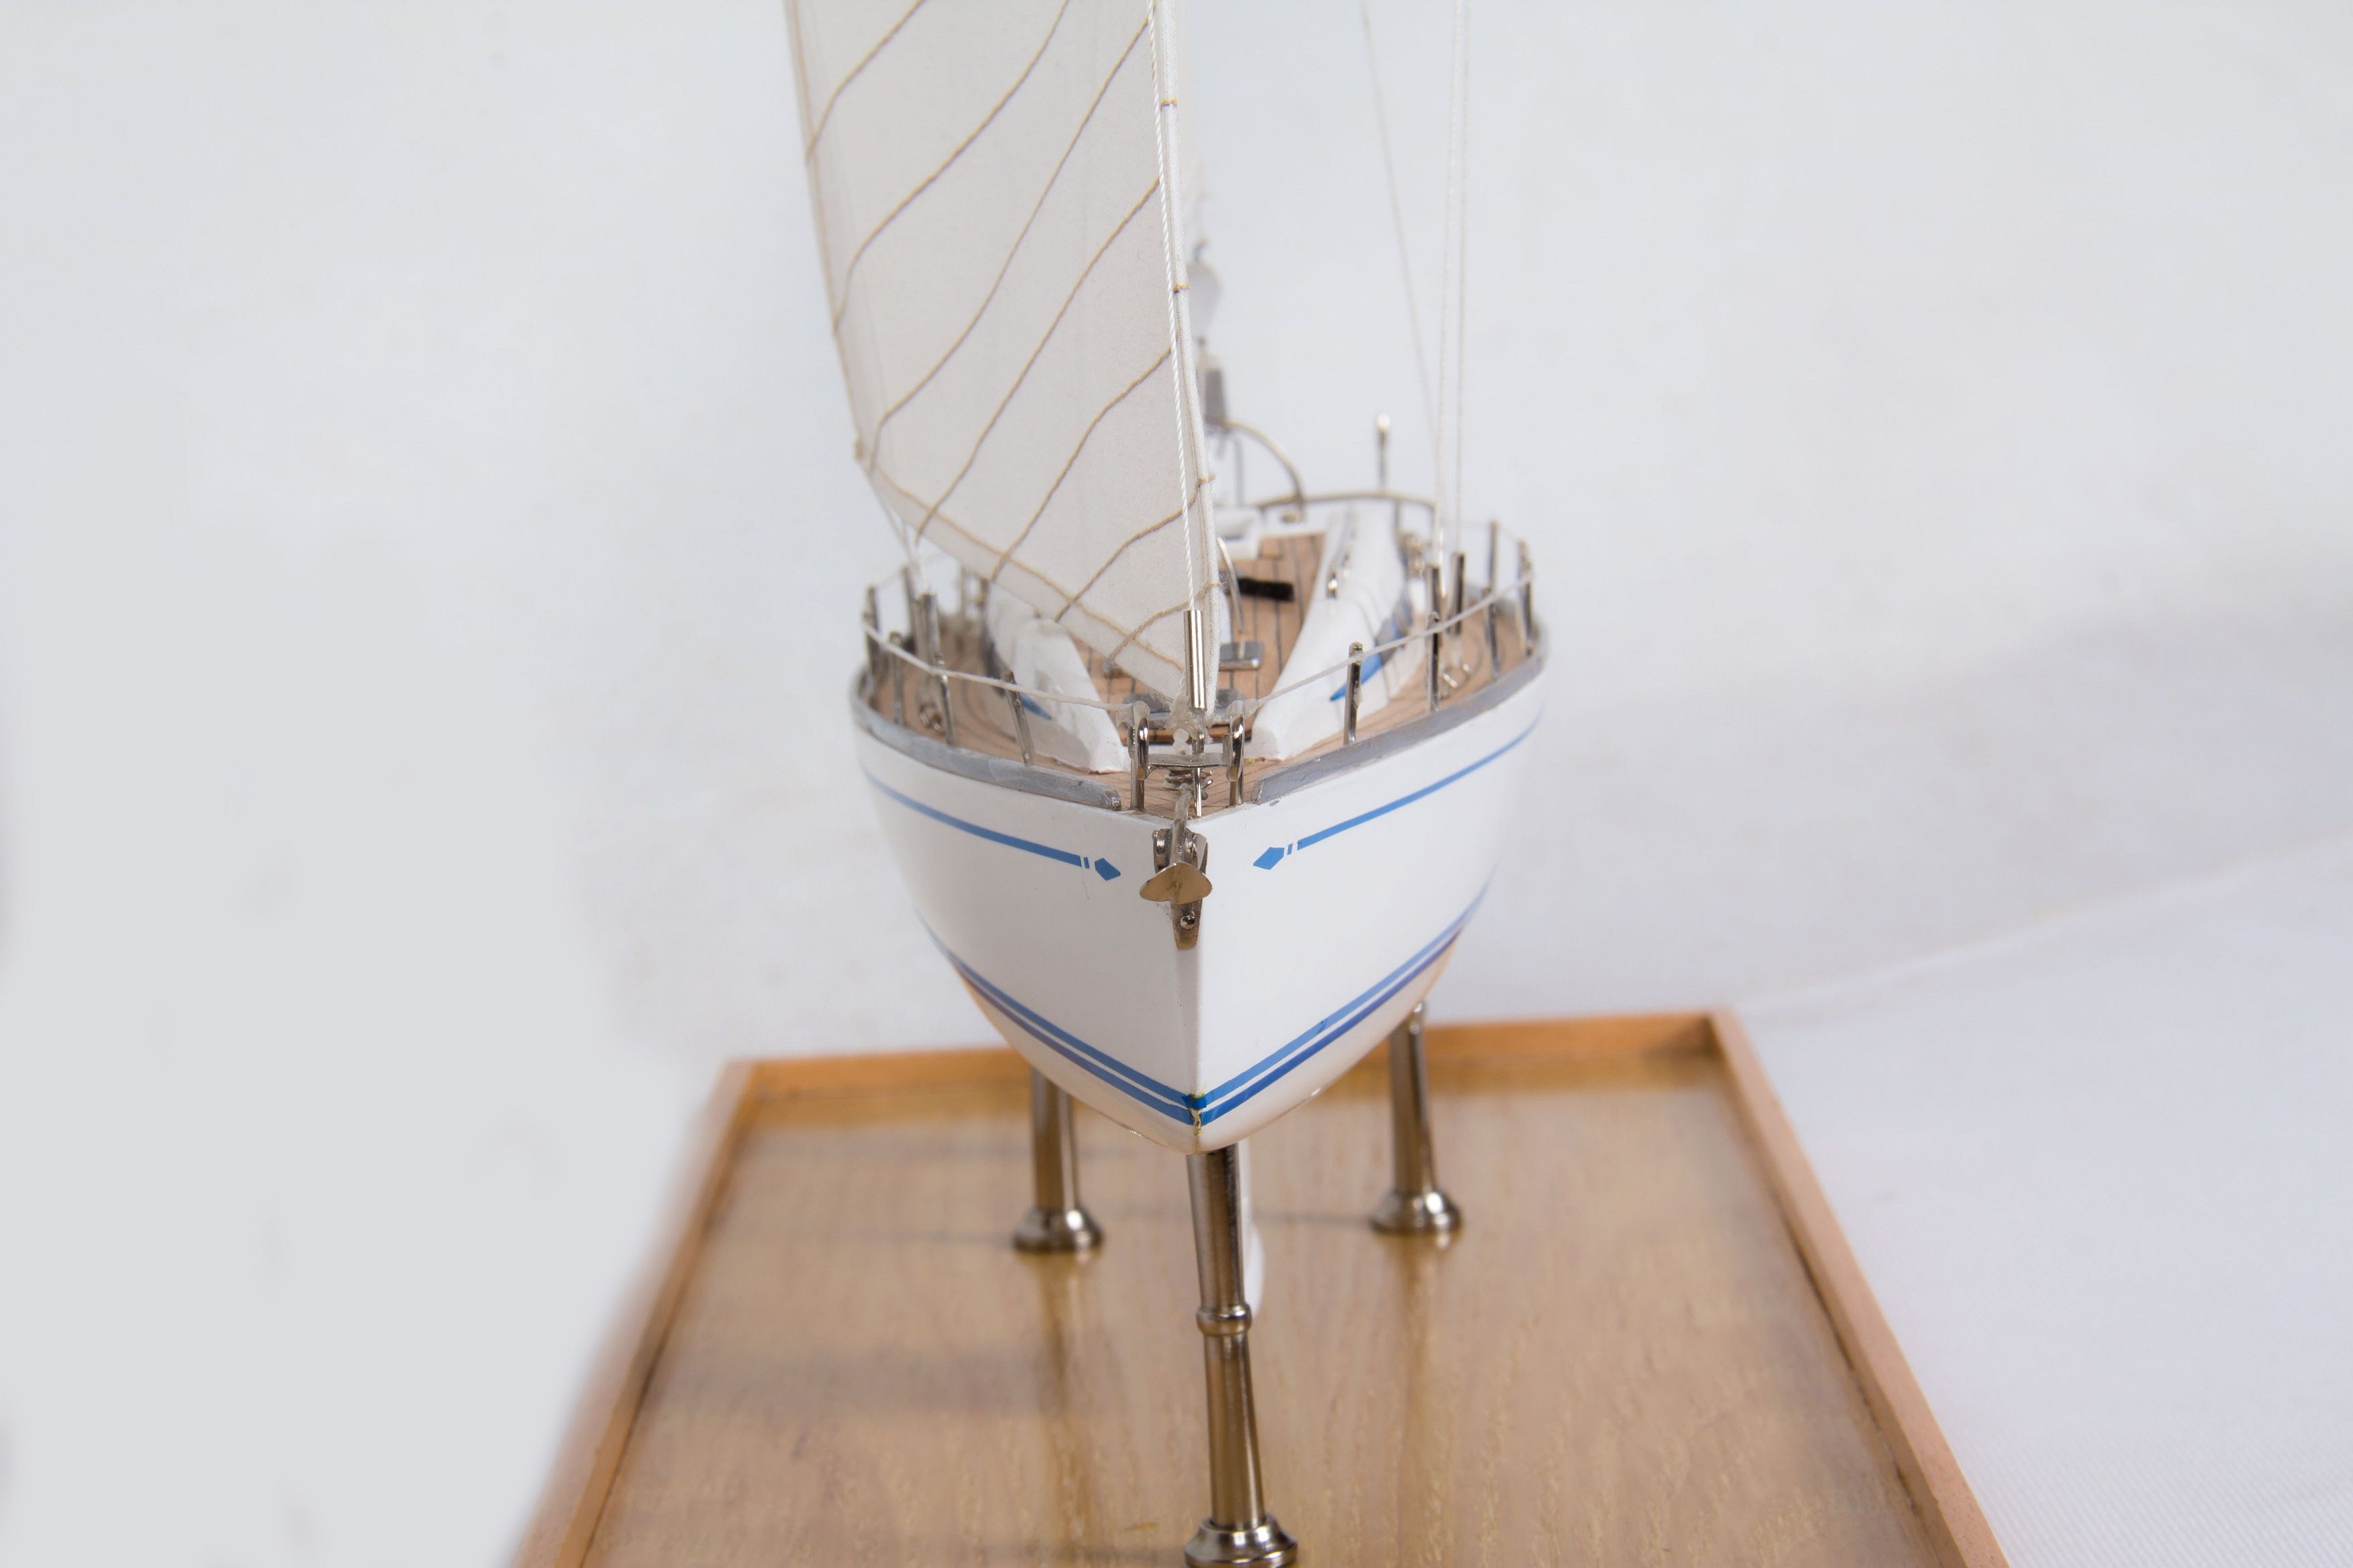 Nautor Swan Sailing Yacht model "Bella Nove"